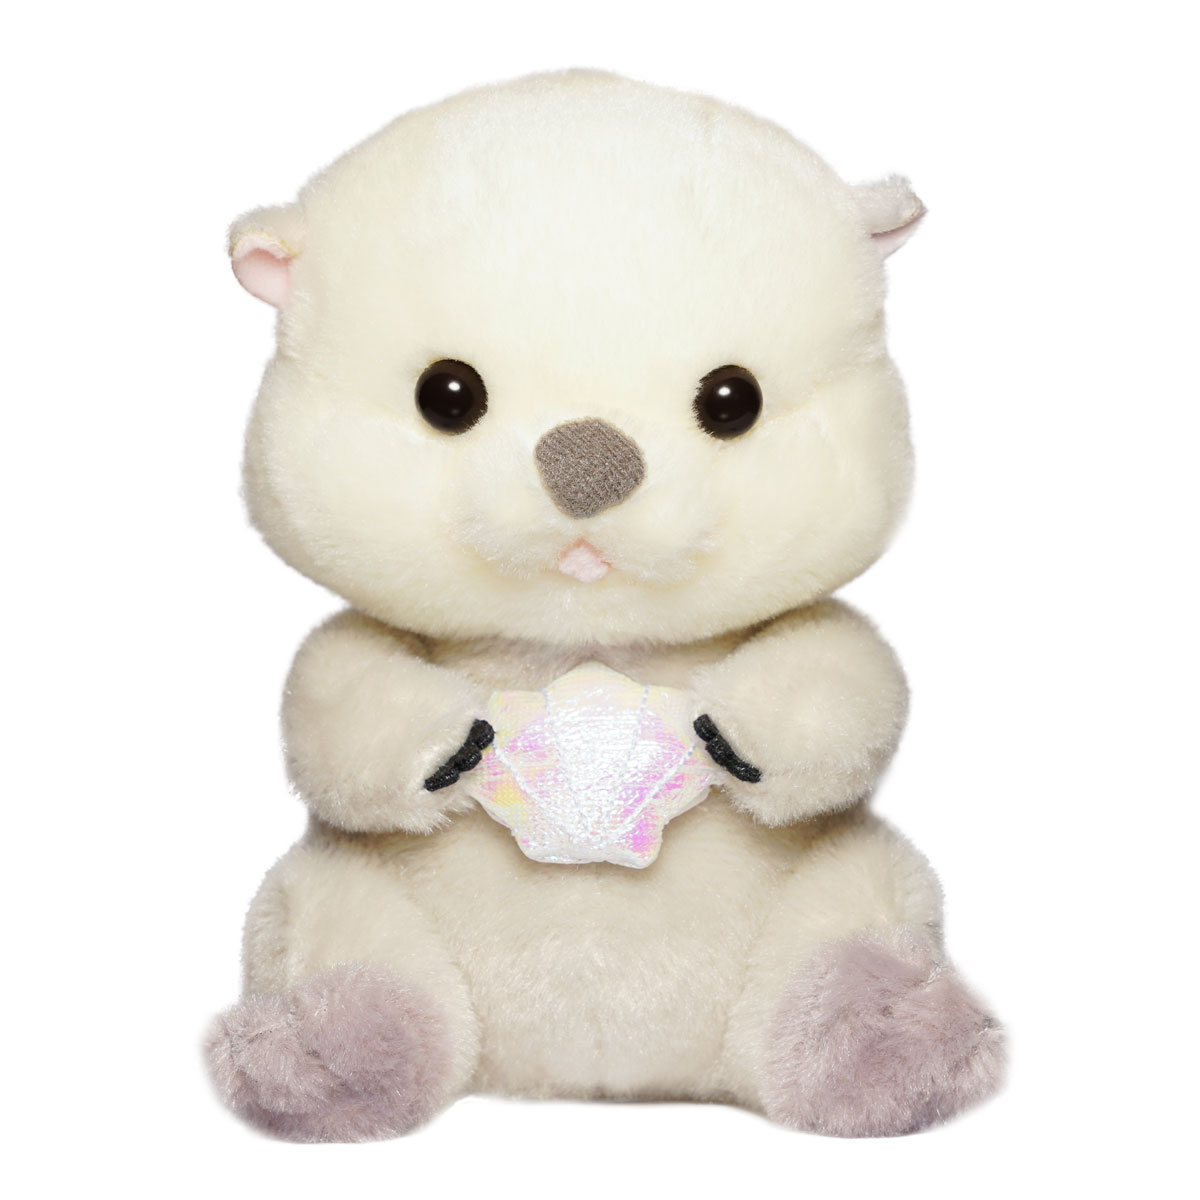 Sea Otter Plushie Kawaii Stuffed Animal Toy Grey & Cream Standard Size 6 Inches